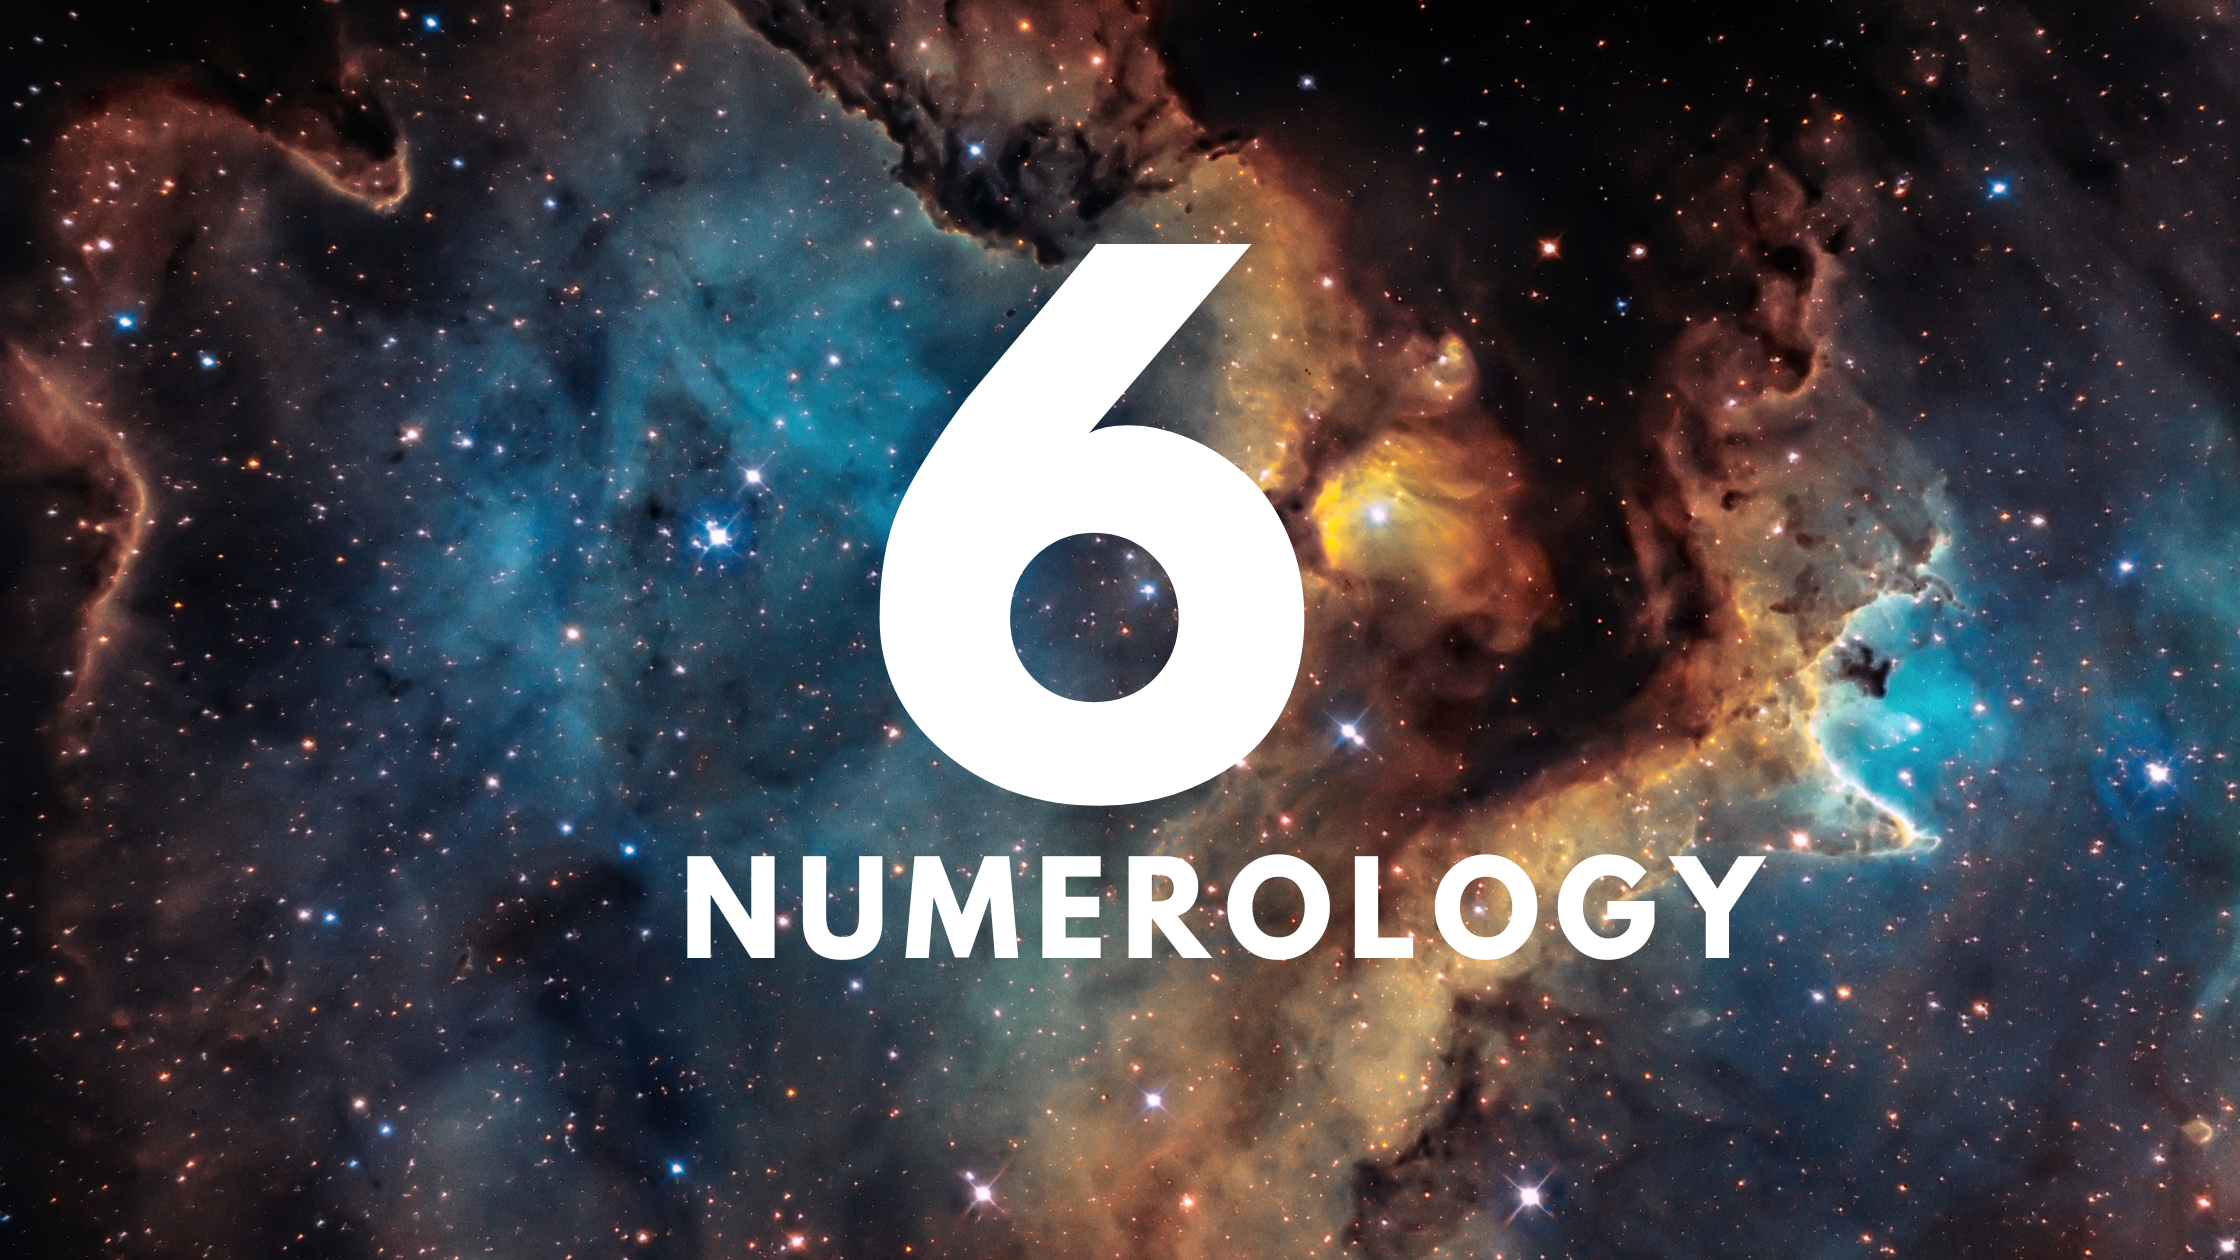 Numerology 6